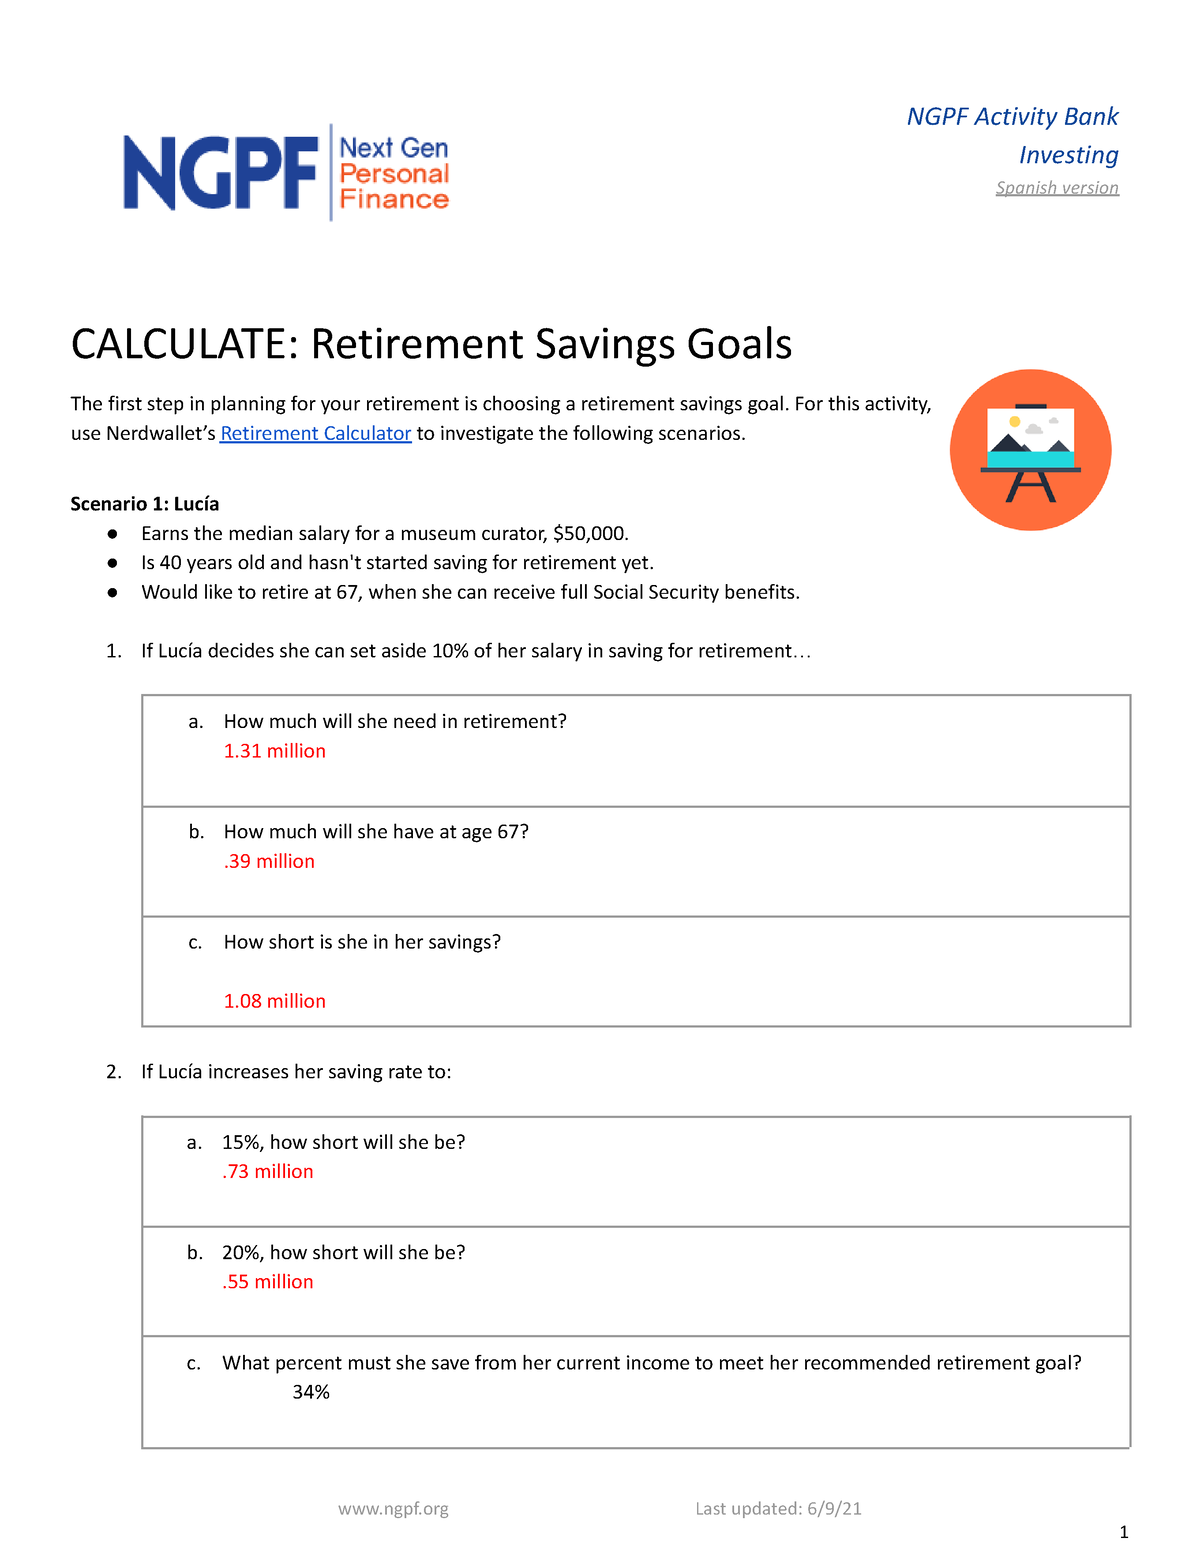 copy-of-calculate-retirement-savings-goals-ngpf-activity-bank